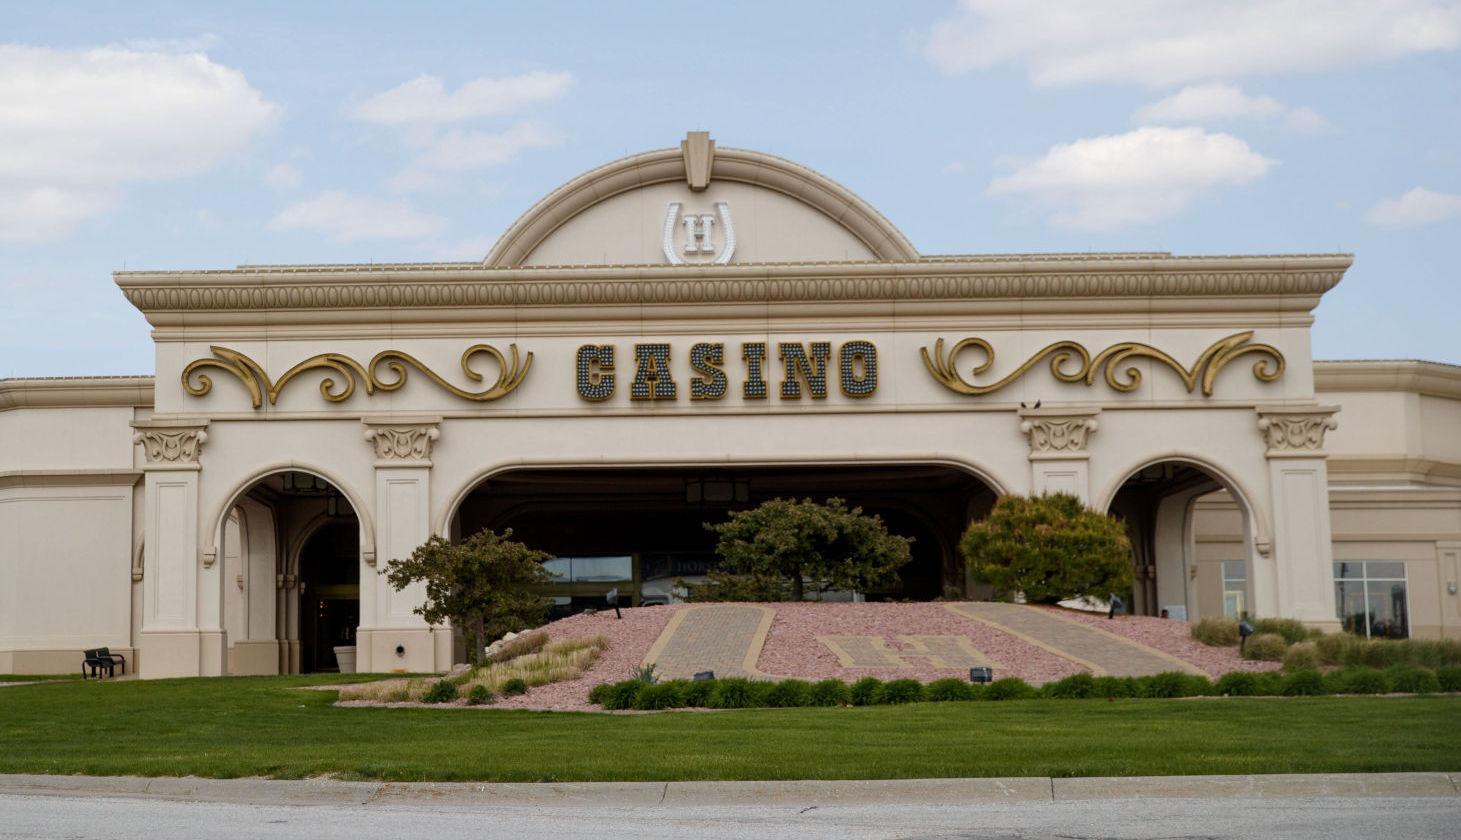 horseshoe casino council bluffs jackie robinson